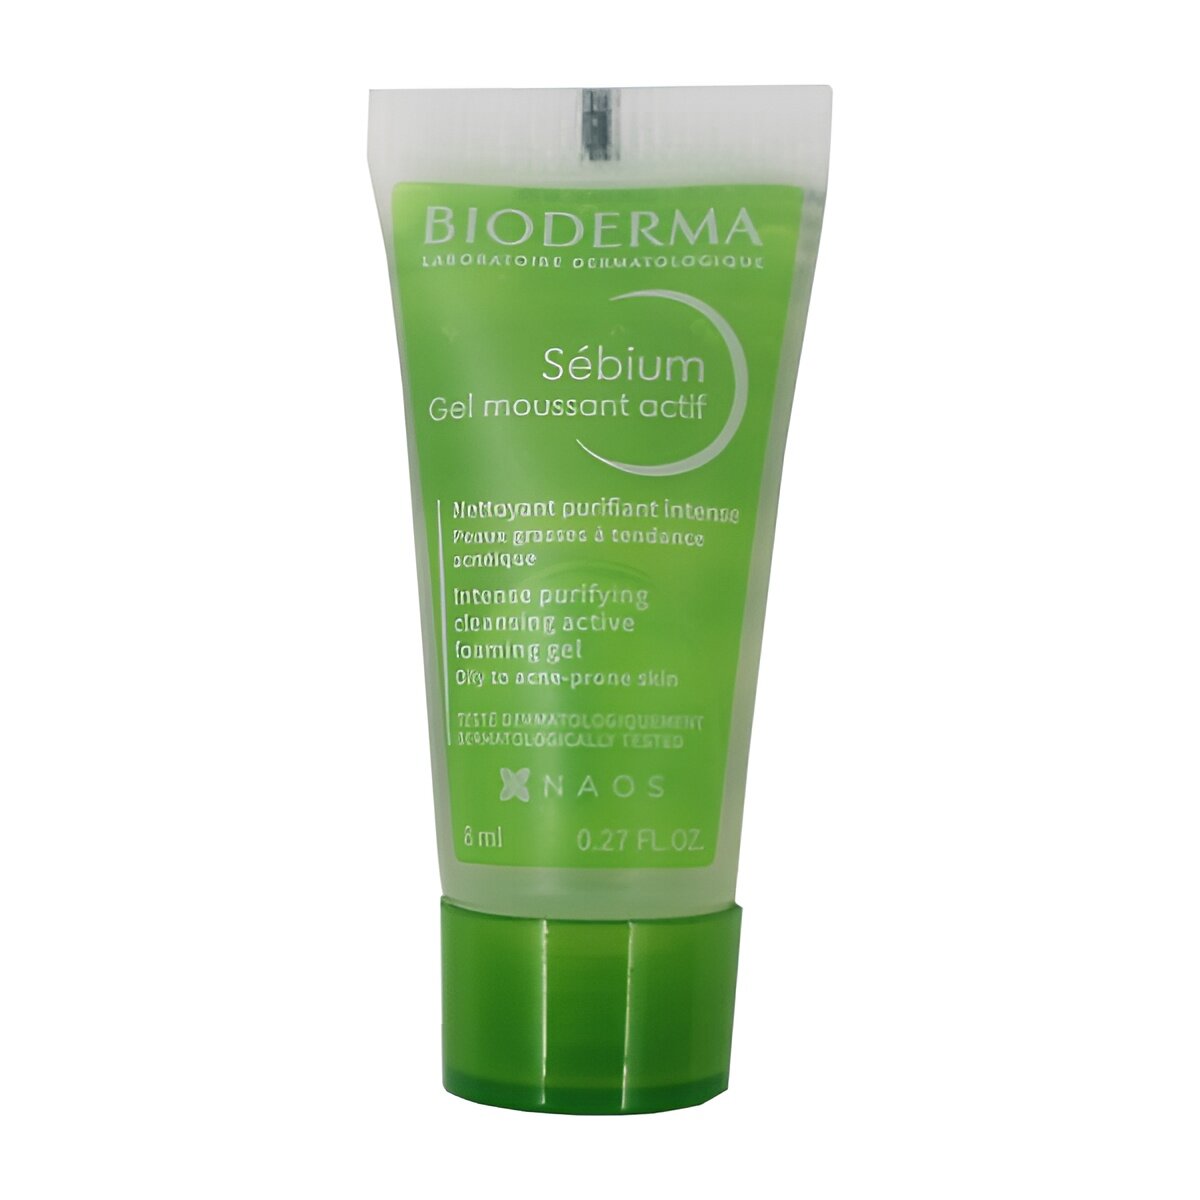 Bioderma Sebium gel moussant actif Очищающий гель 8ml